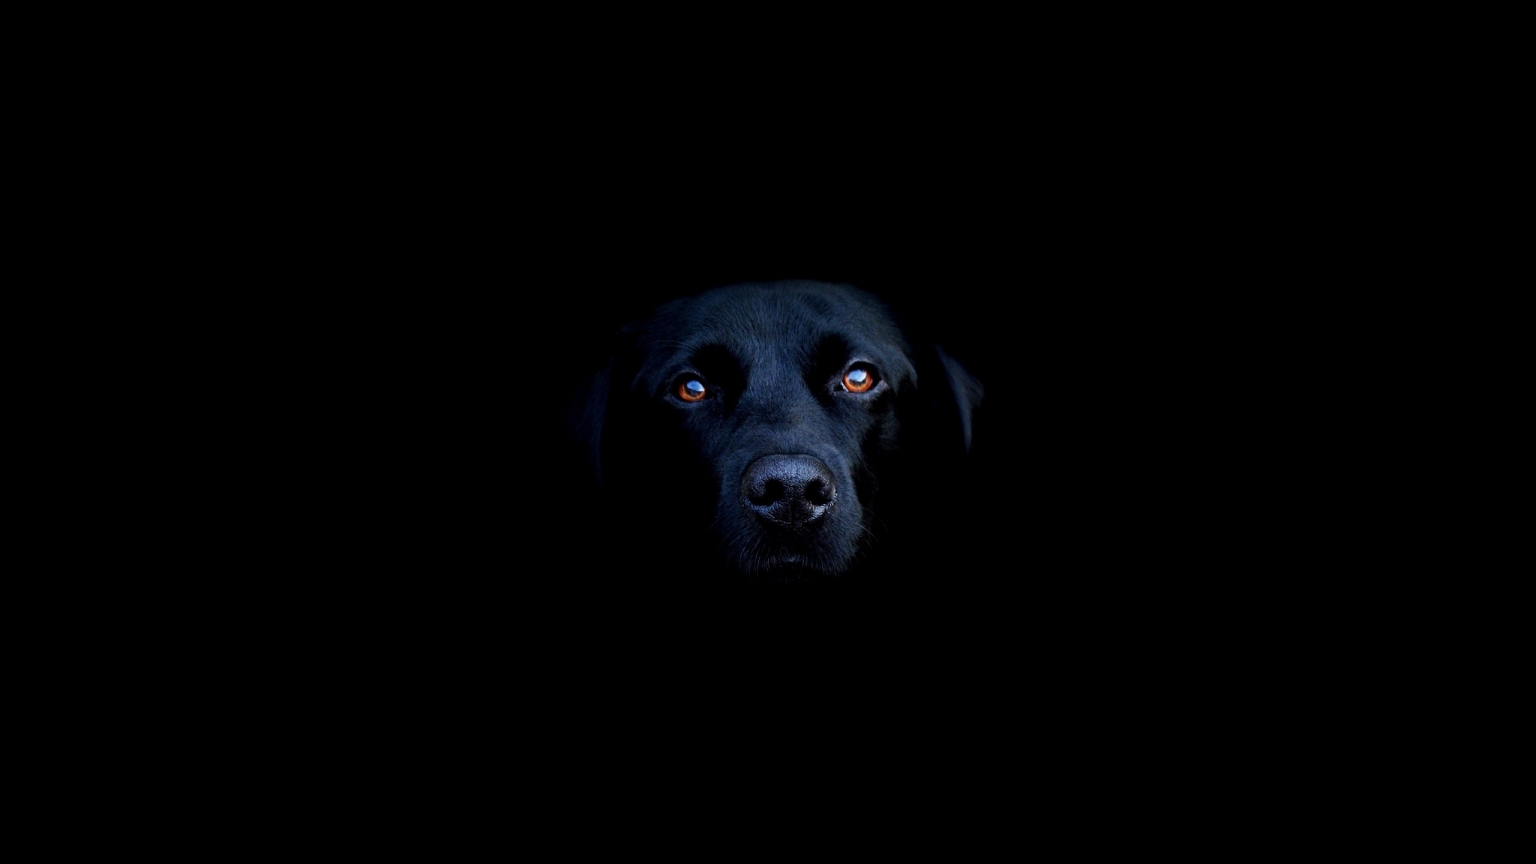 Black dog for 1536 x 864 HDTV resolution